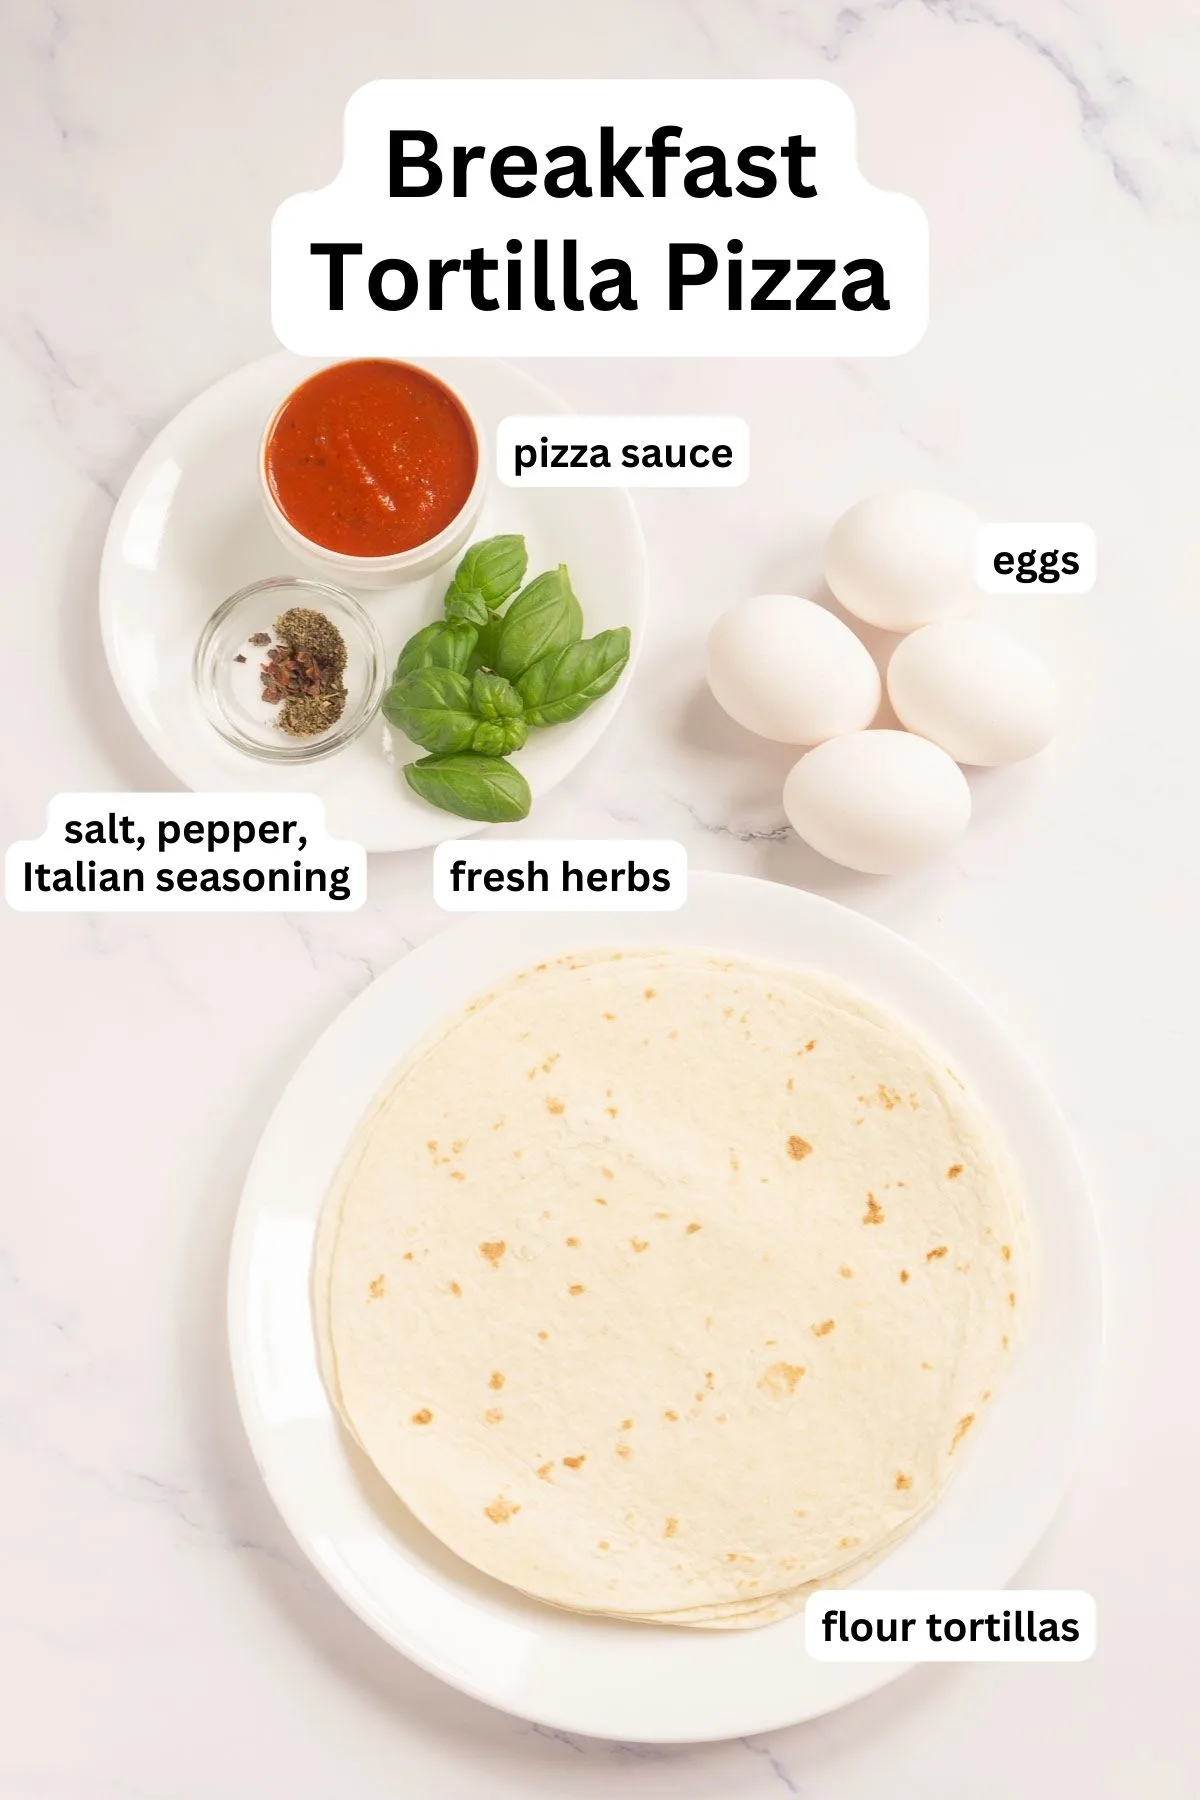 Ingredients to make breakfast tortilla pizzas